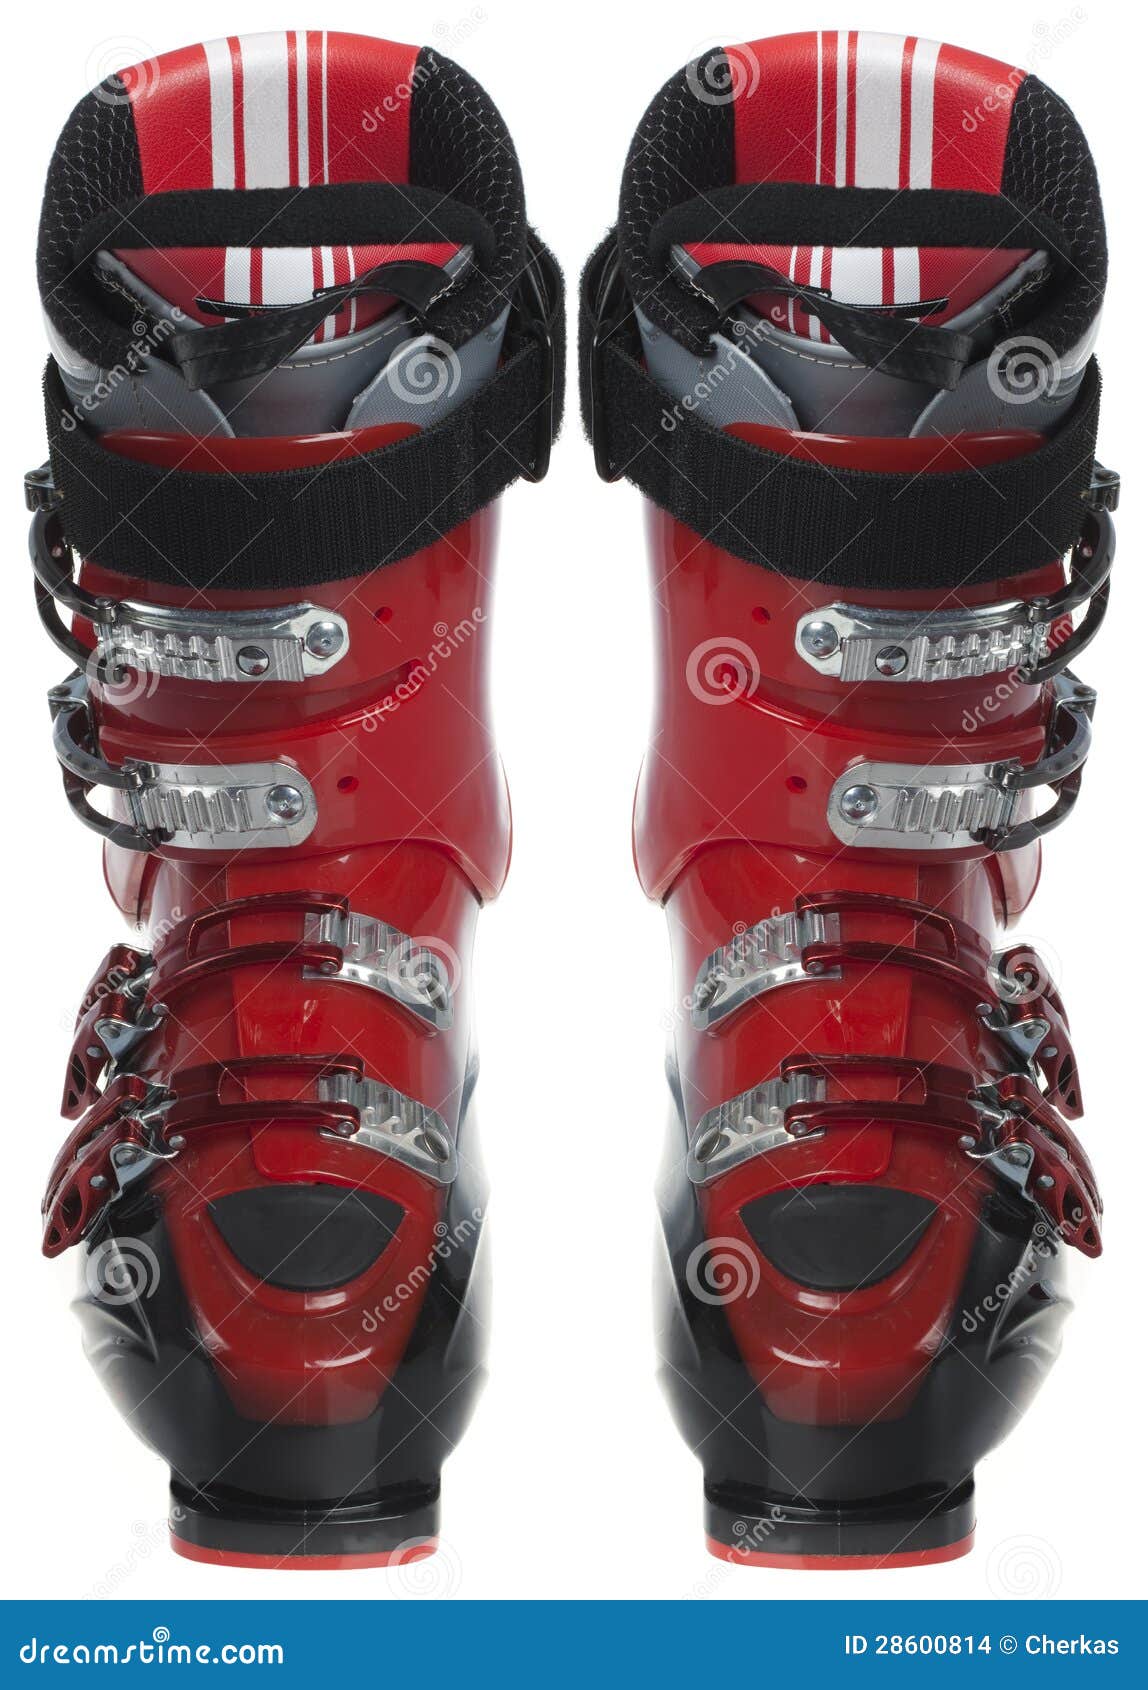 Ski boots stock photo. Image of clothing, downhill, isolated - 28600814